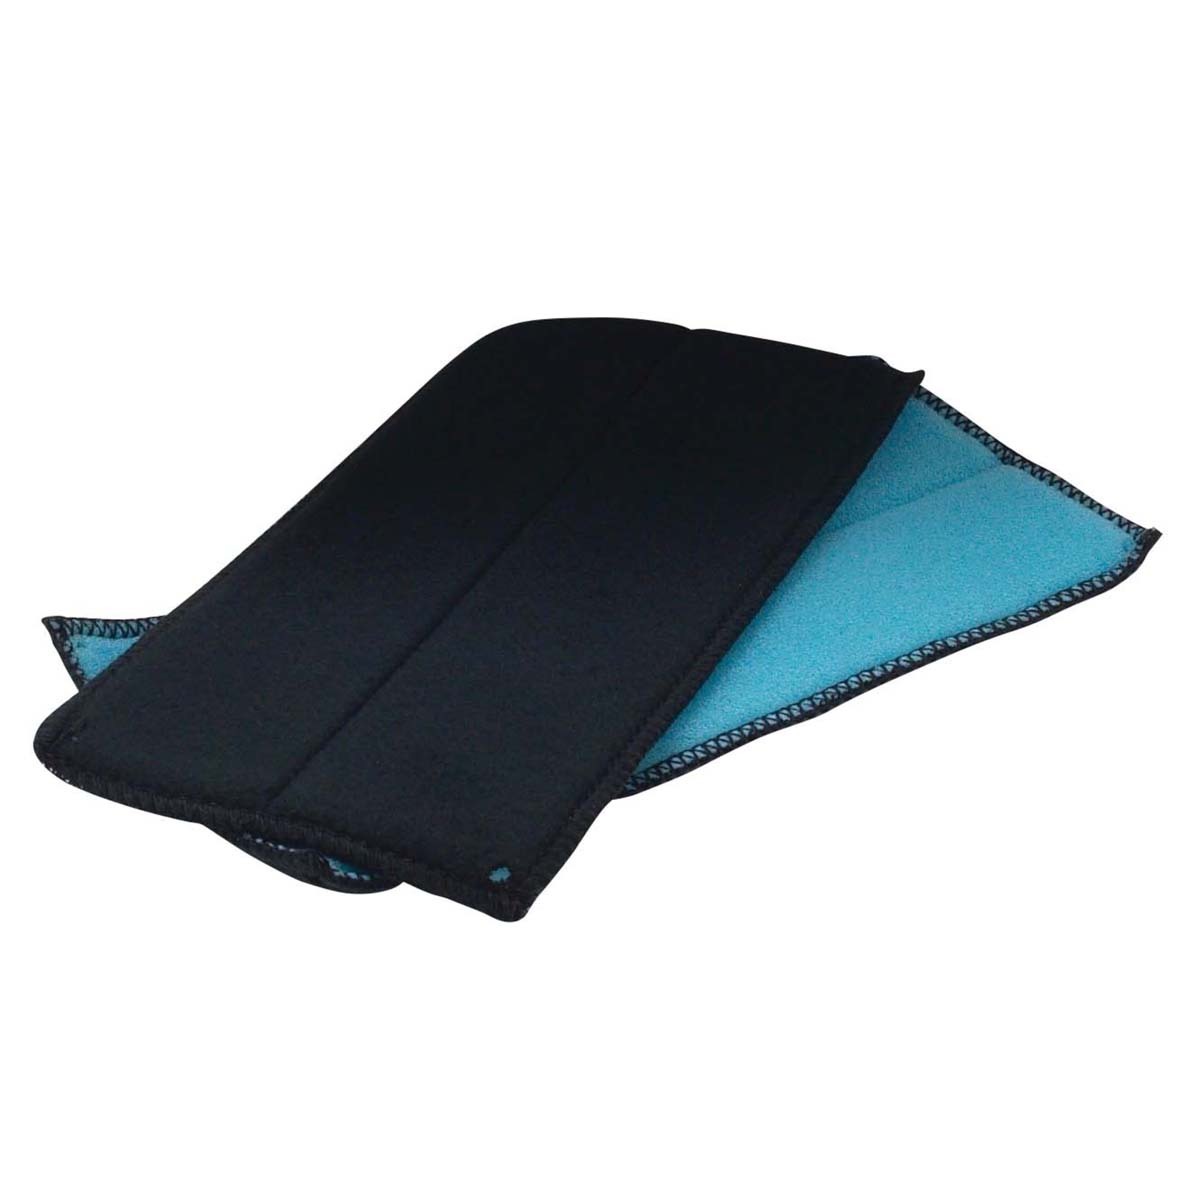 Jackson Safety® Black And Blue Terry Cloth Sweatband